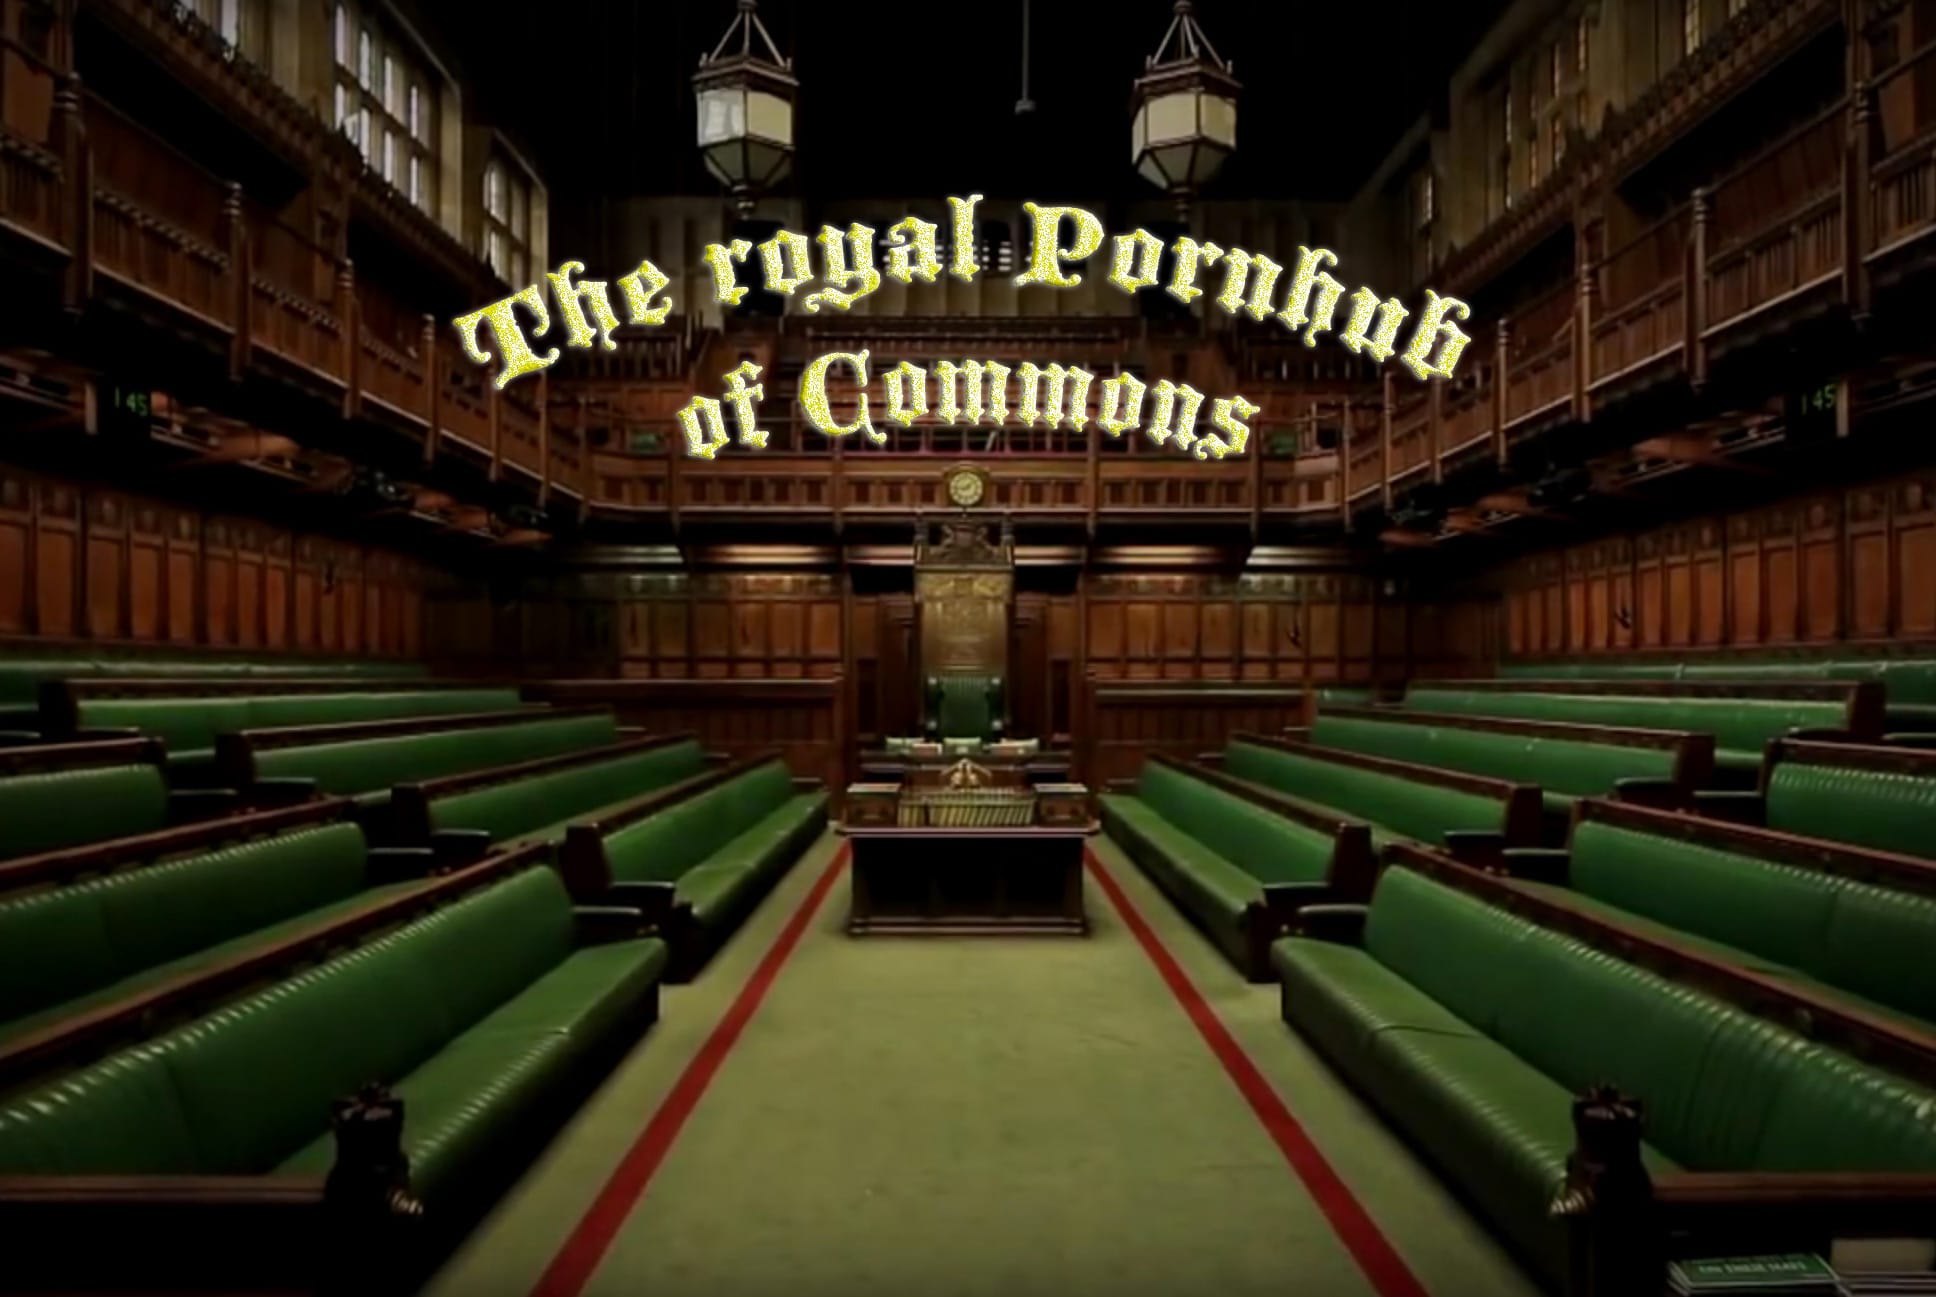 The royal pornhub of commons